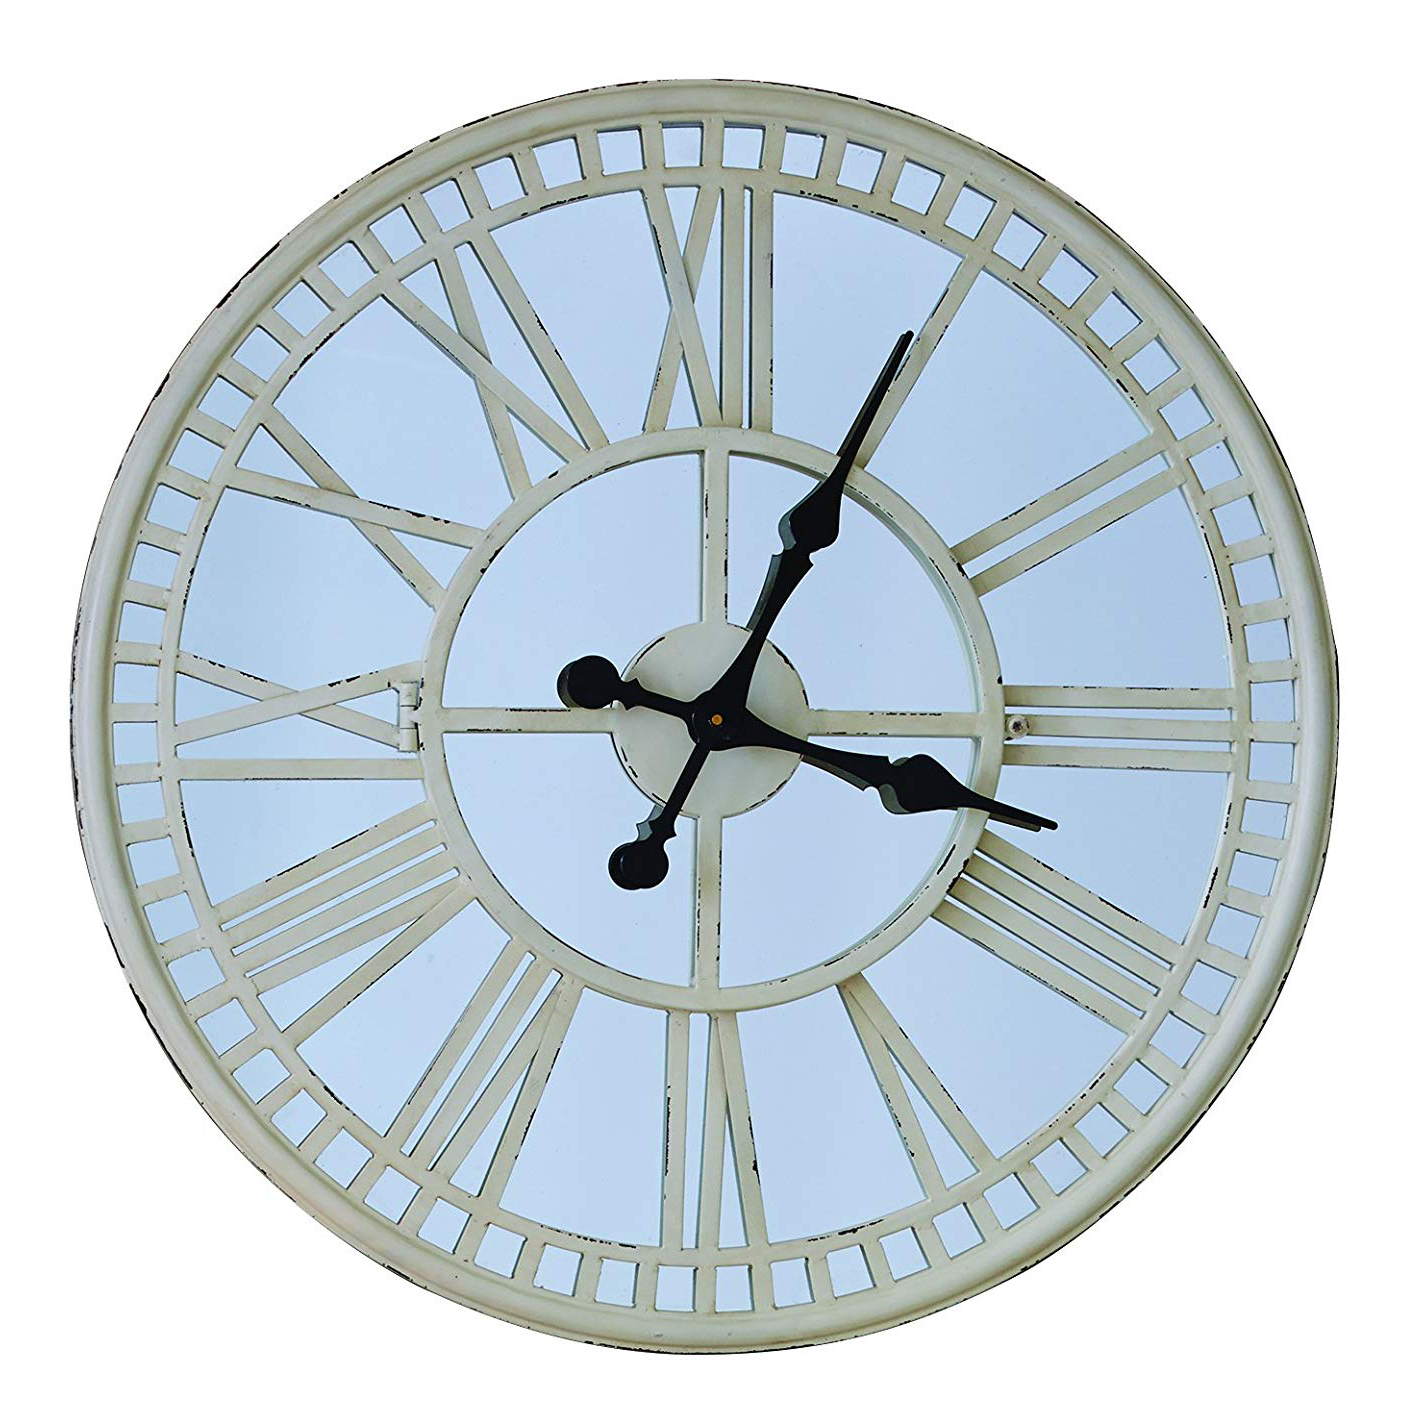 Metal round shape mirrored wall clock